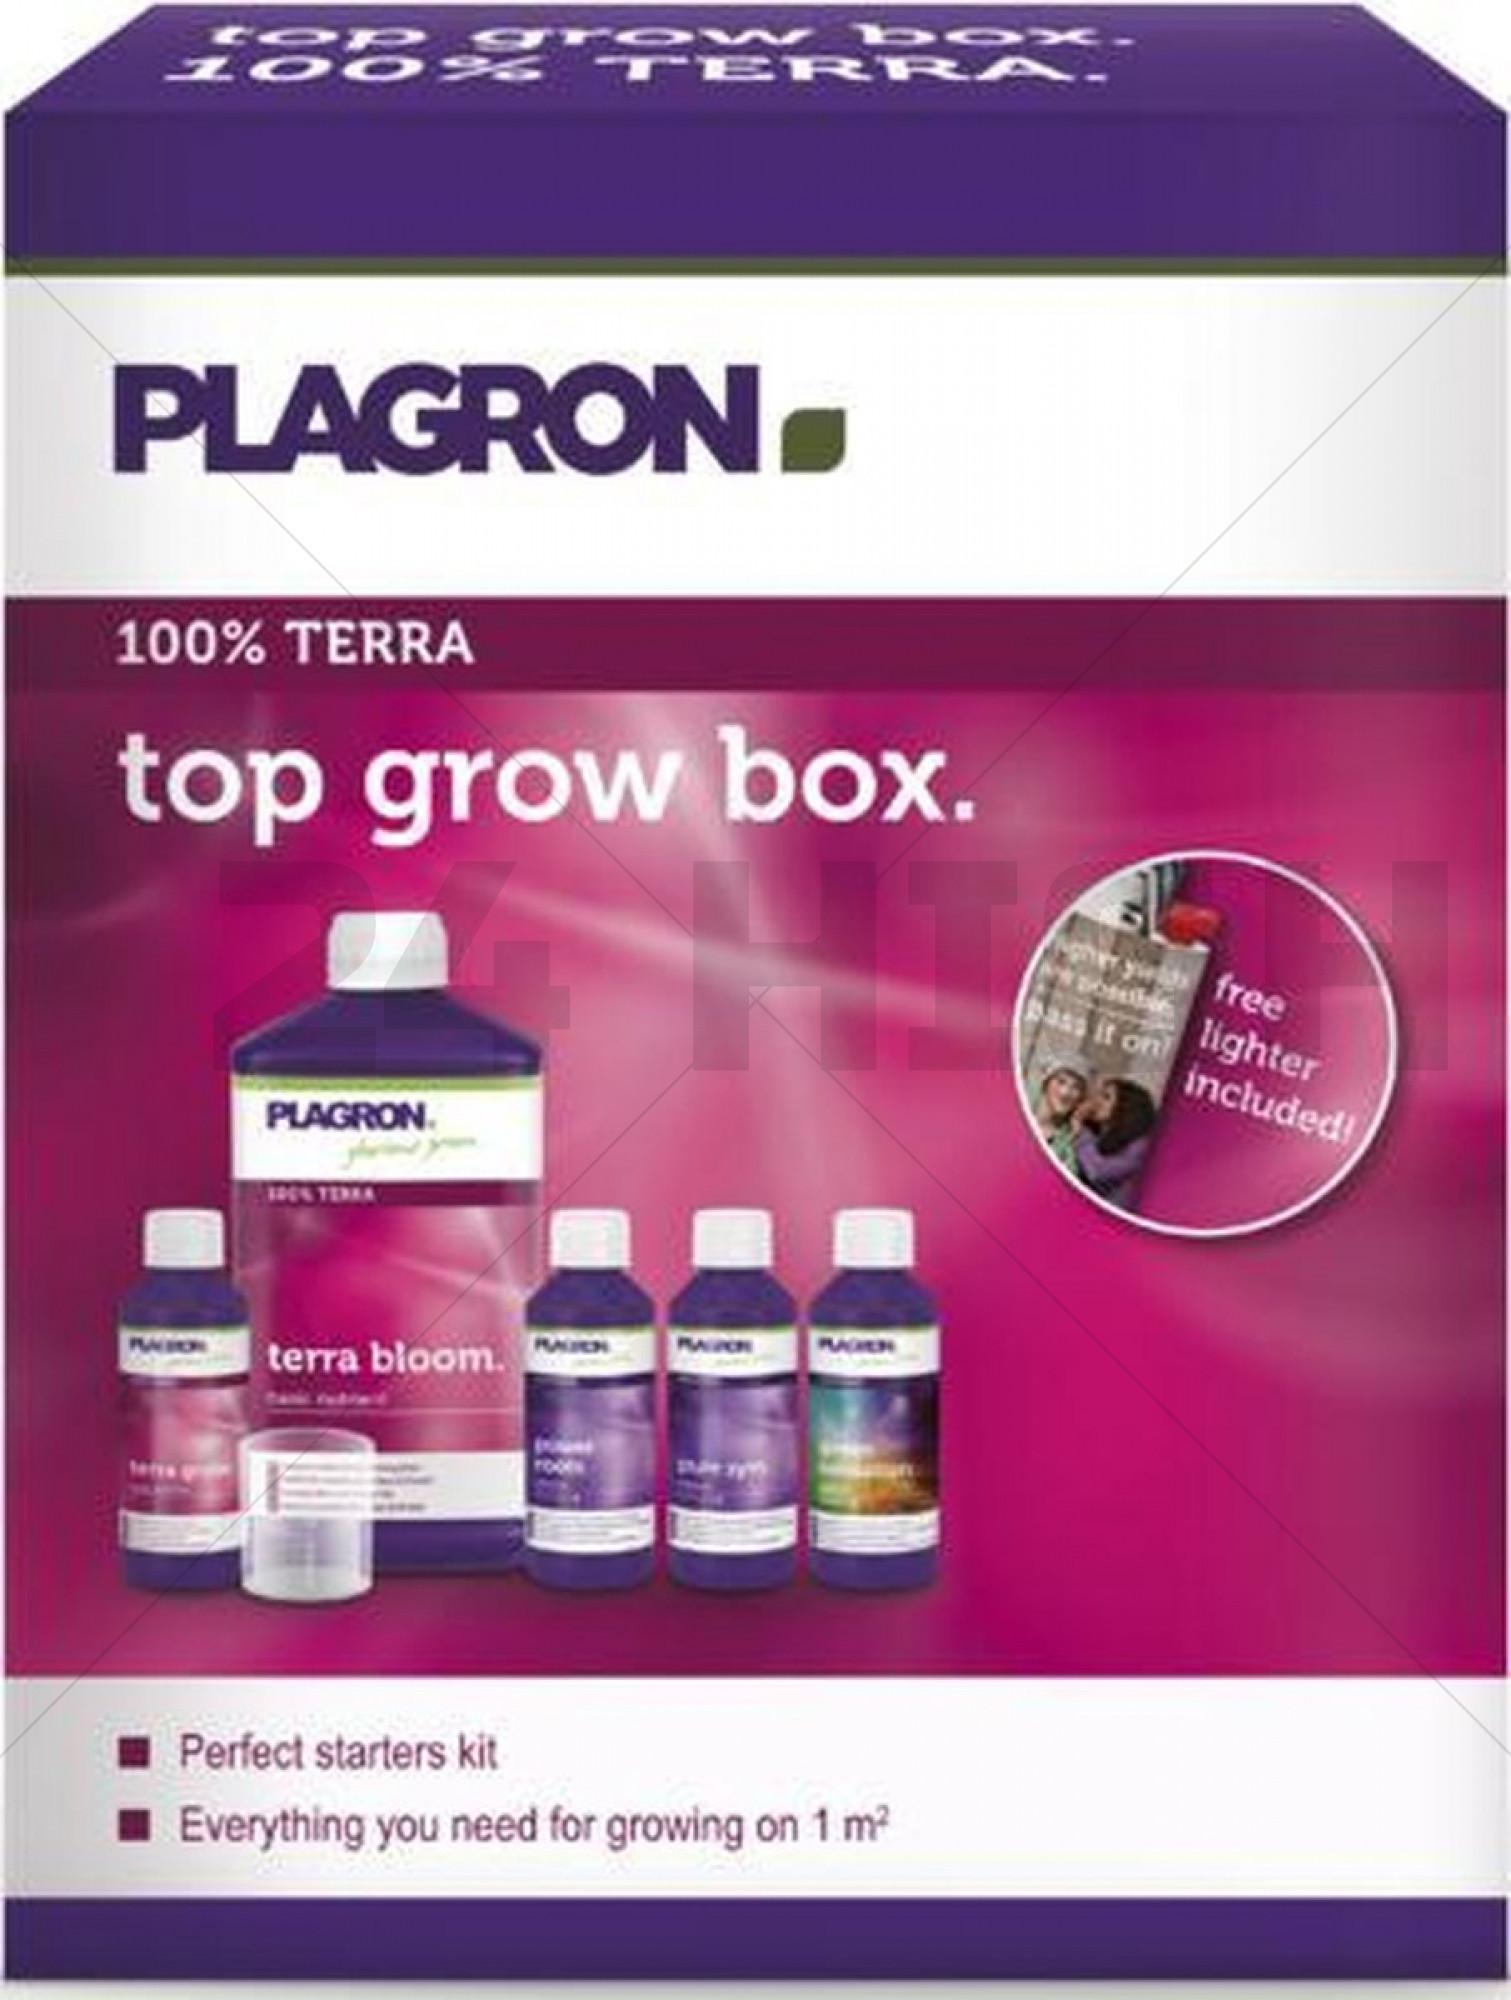 Plagron - Top Grow Box 100% TERRA